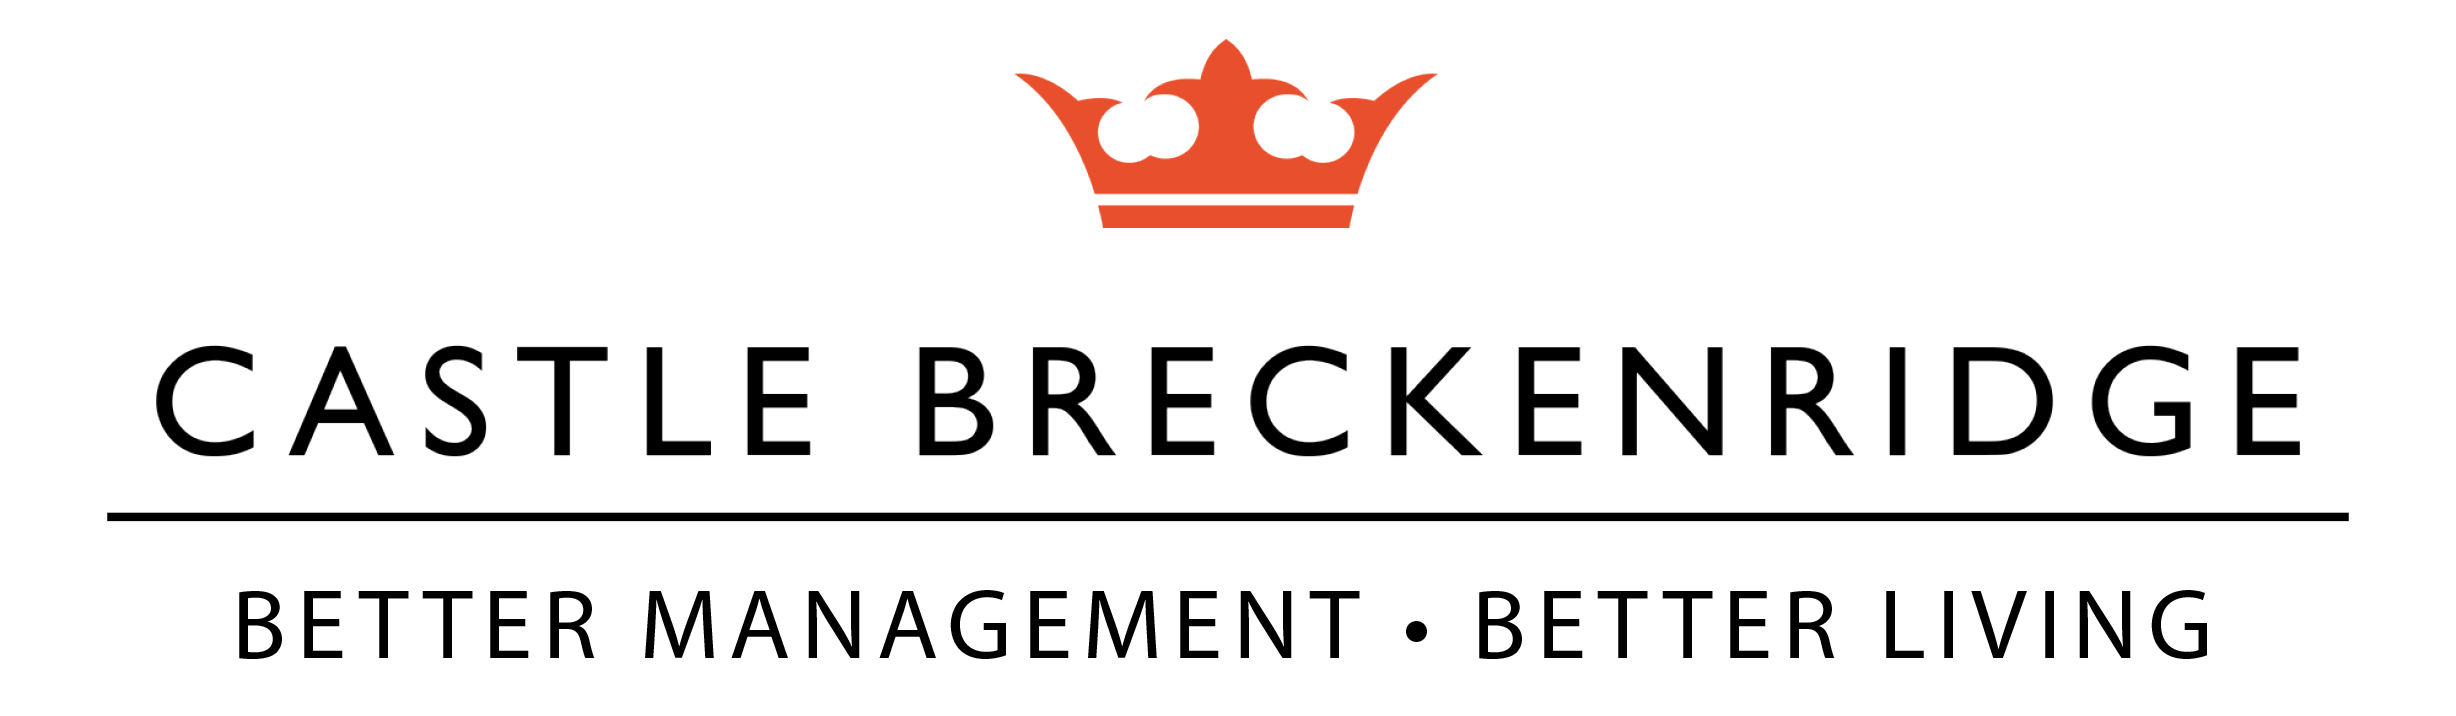 Castle-Breckenridge Management logo